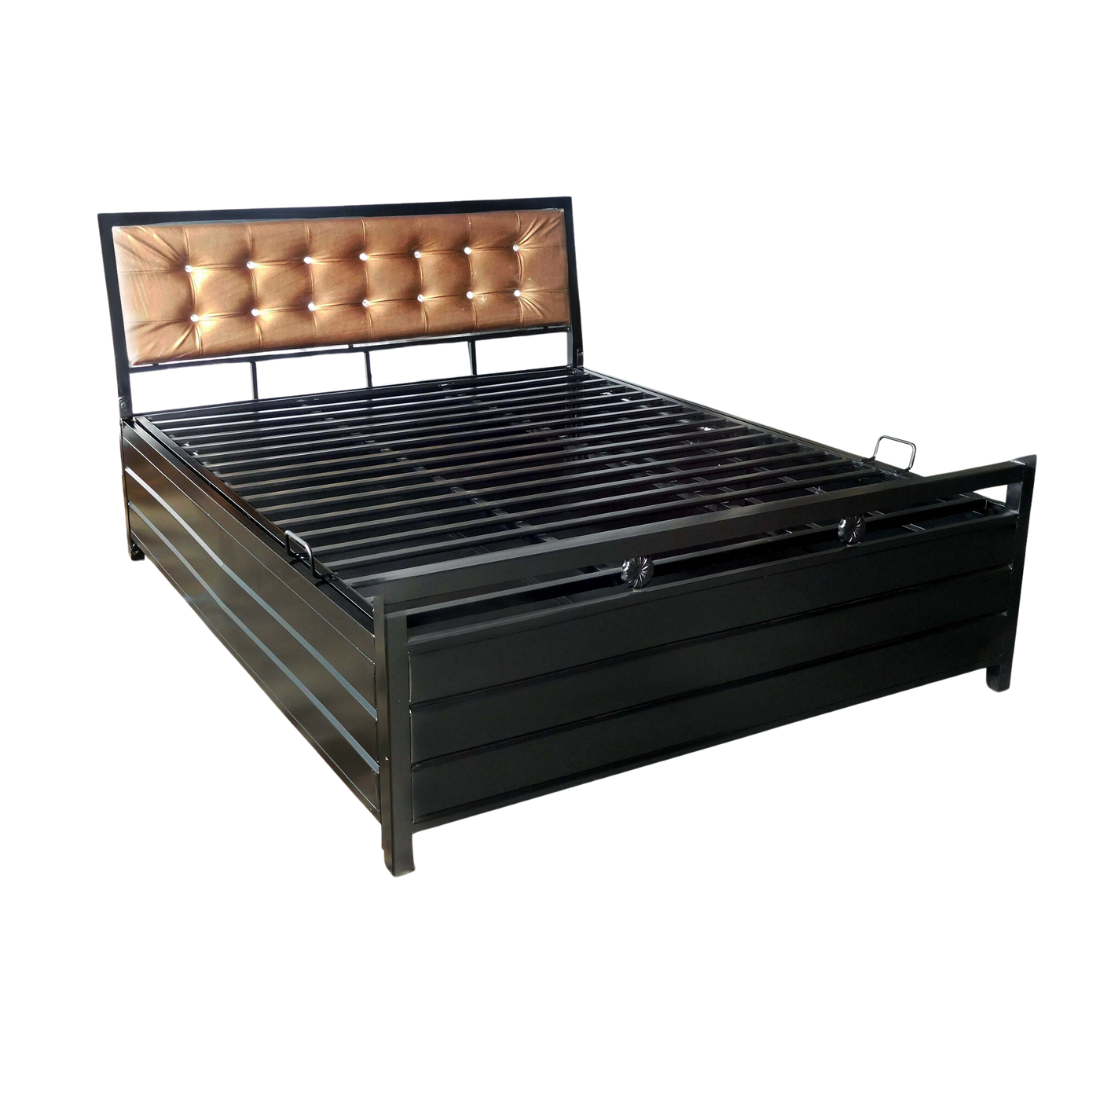 Heath Hydraulic Storage Single Metal Bed with Golden Cushion Headrest (Color - Black)